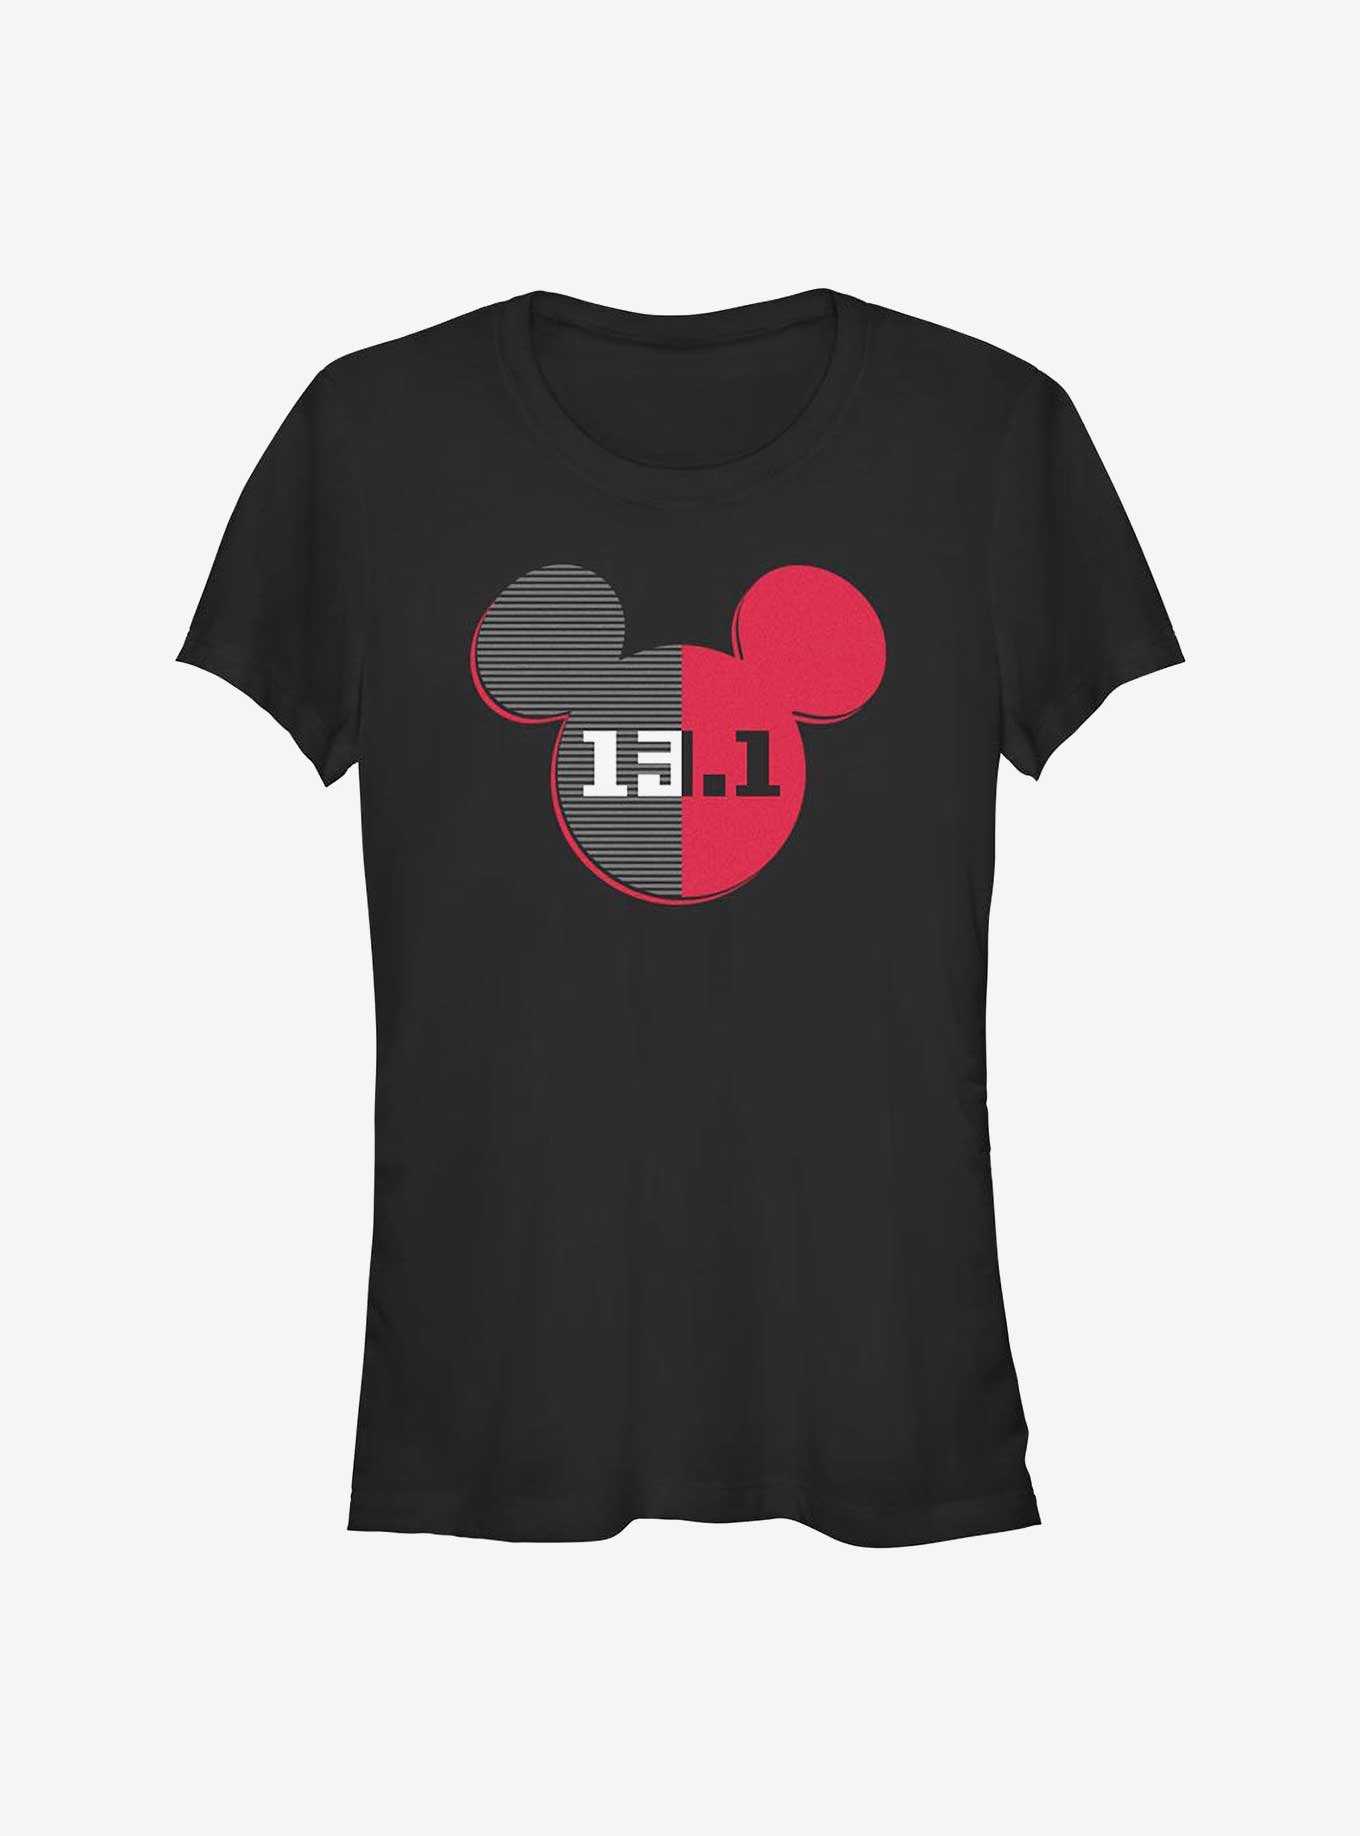 Disney Mickey Mouse 13.1 Half Marathon Ears Girls T-Shirt, , hi-res